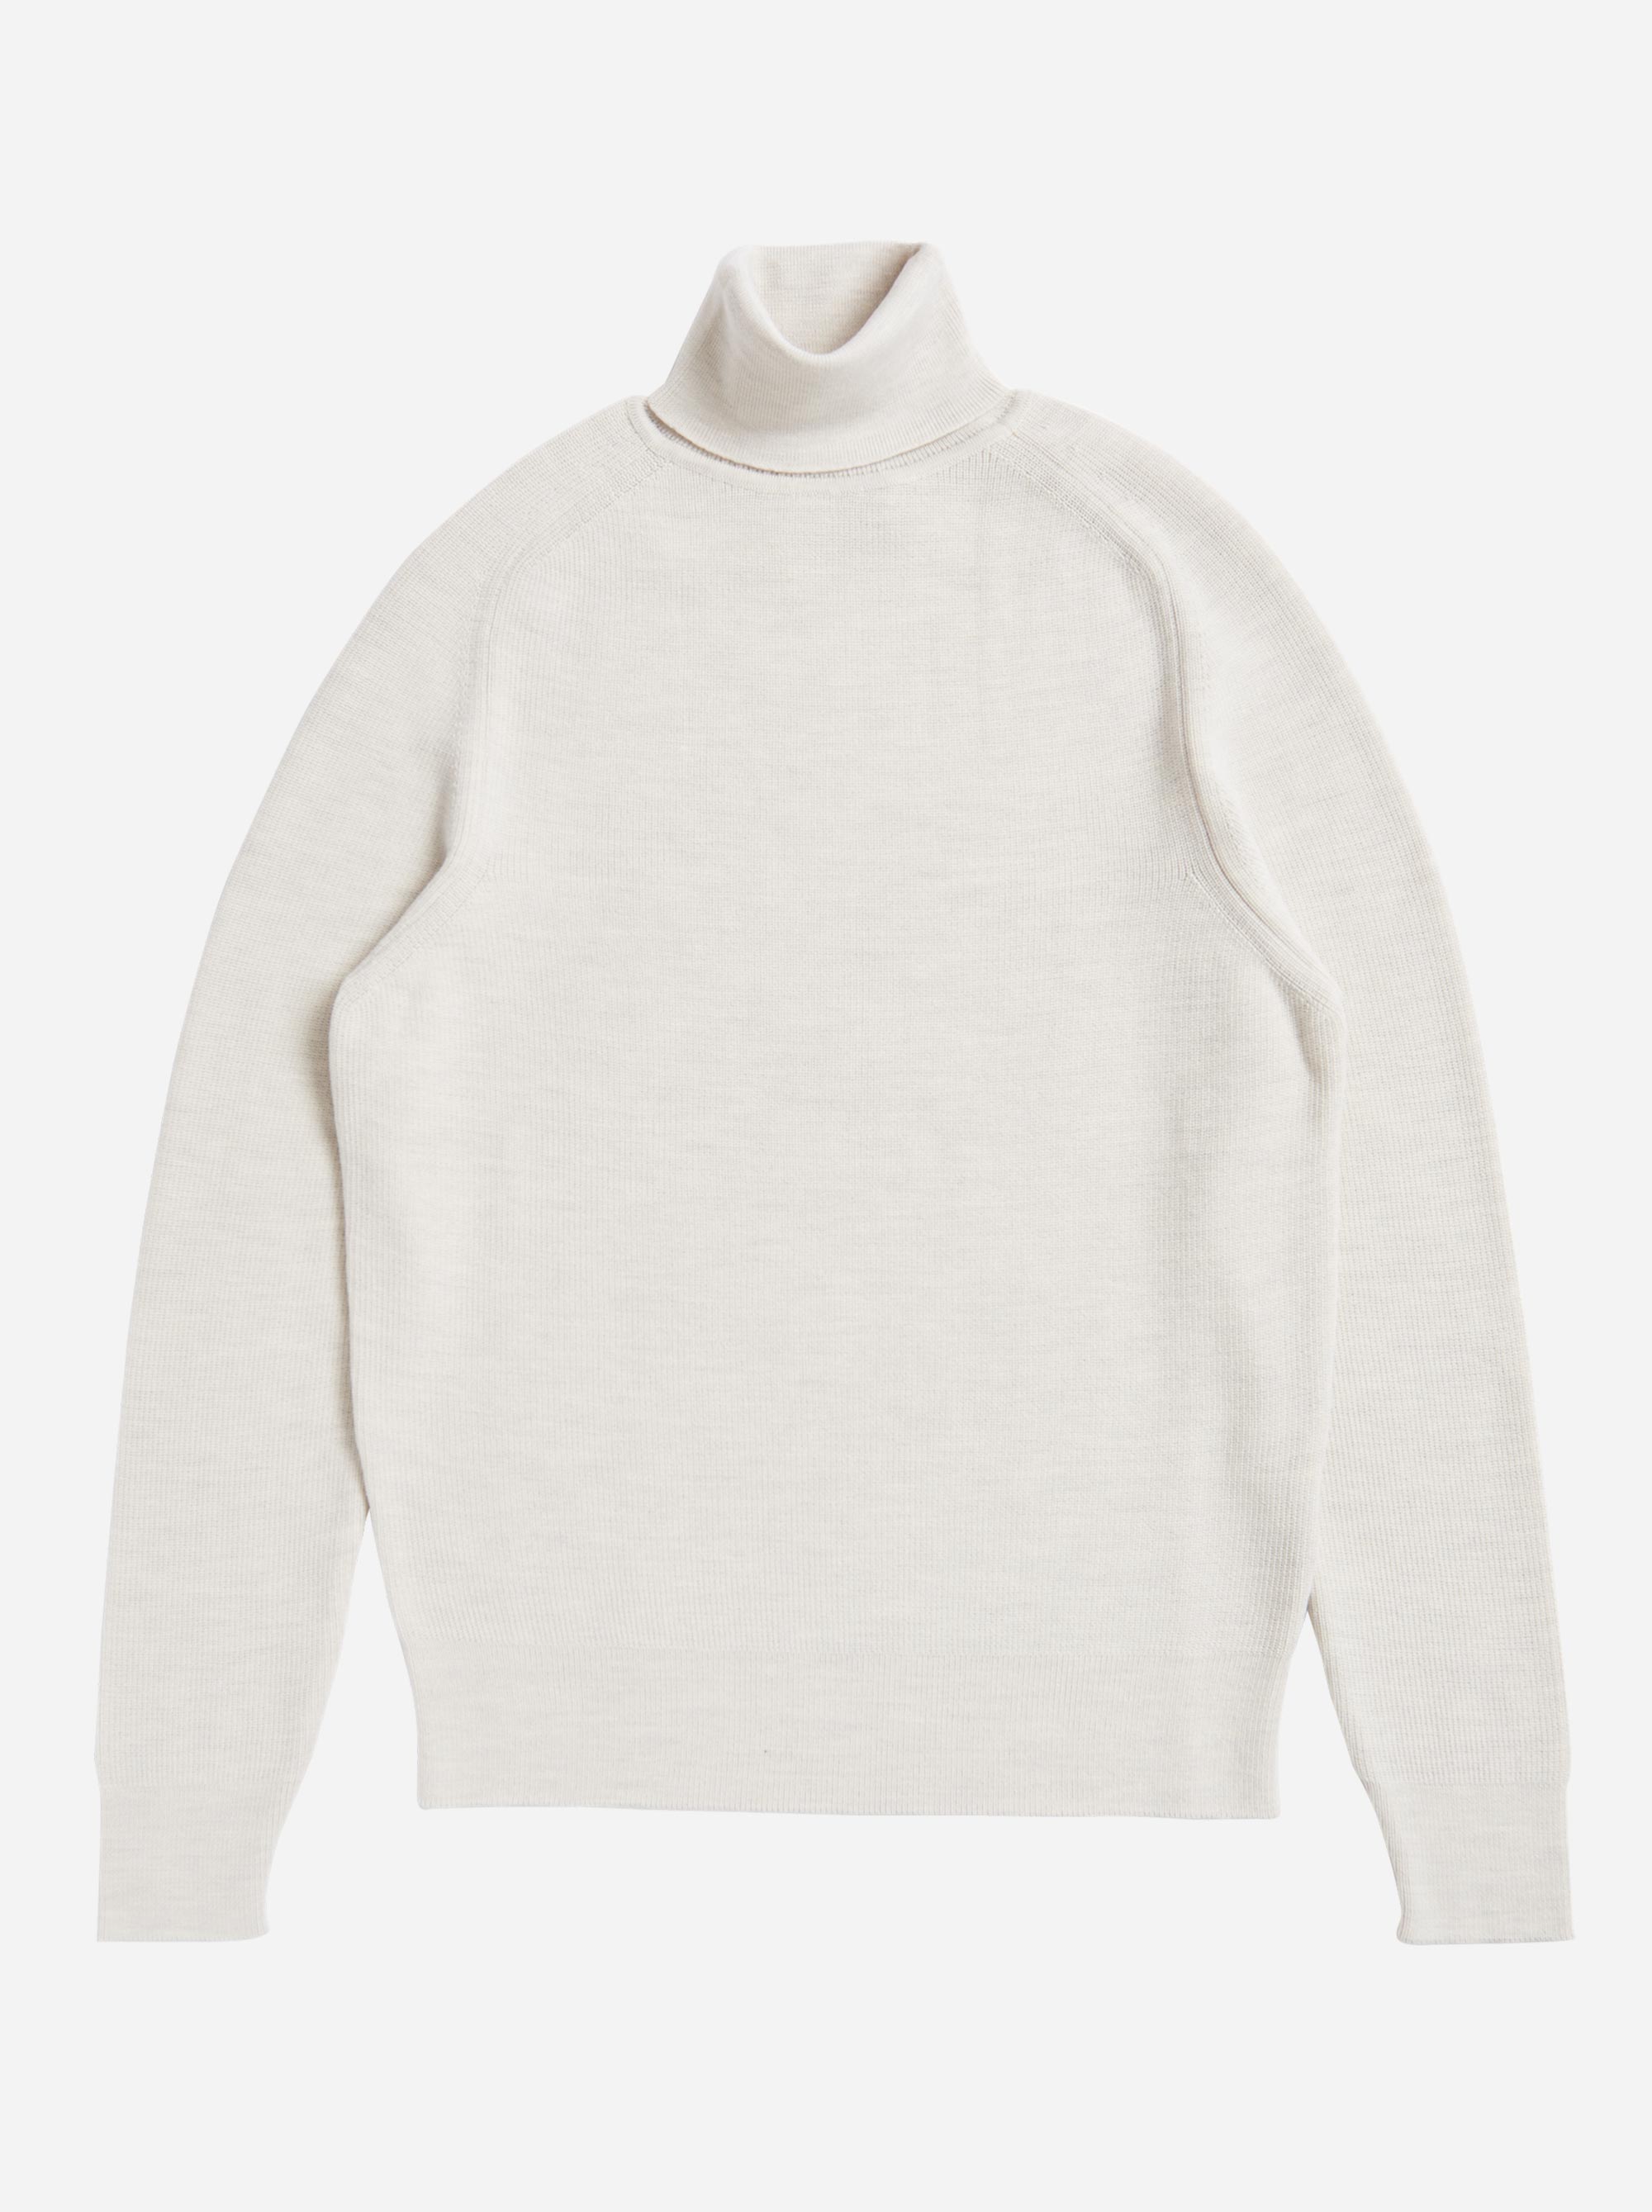 Teym - Turtleneck - The Merino Sweater - Men - White - 6